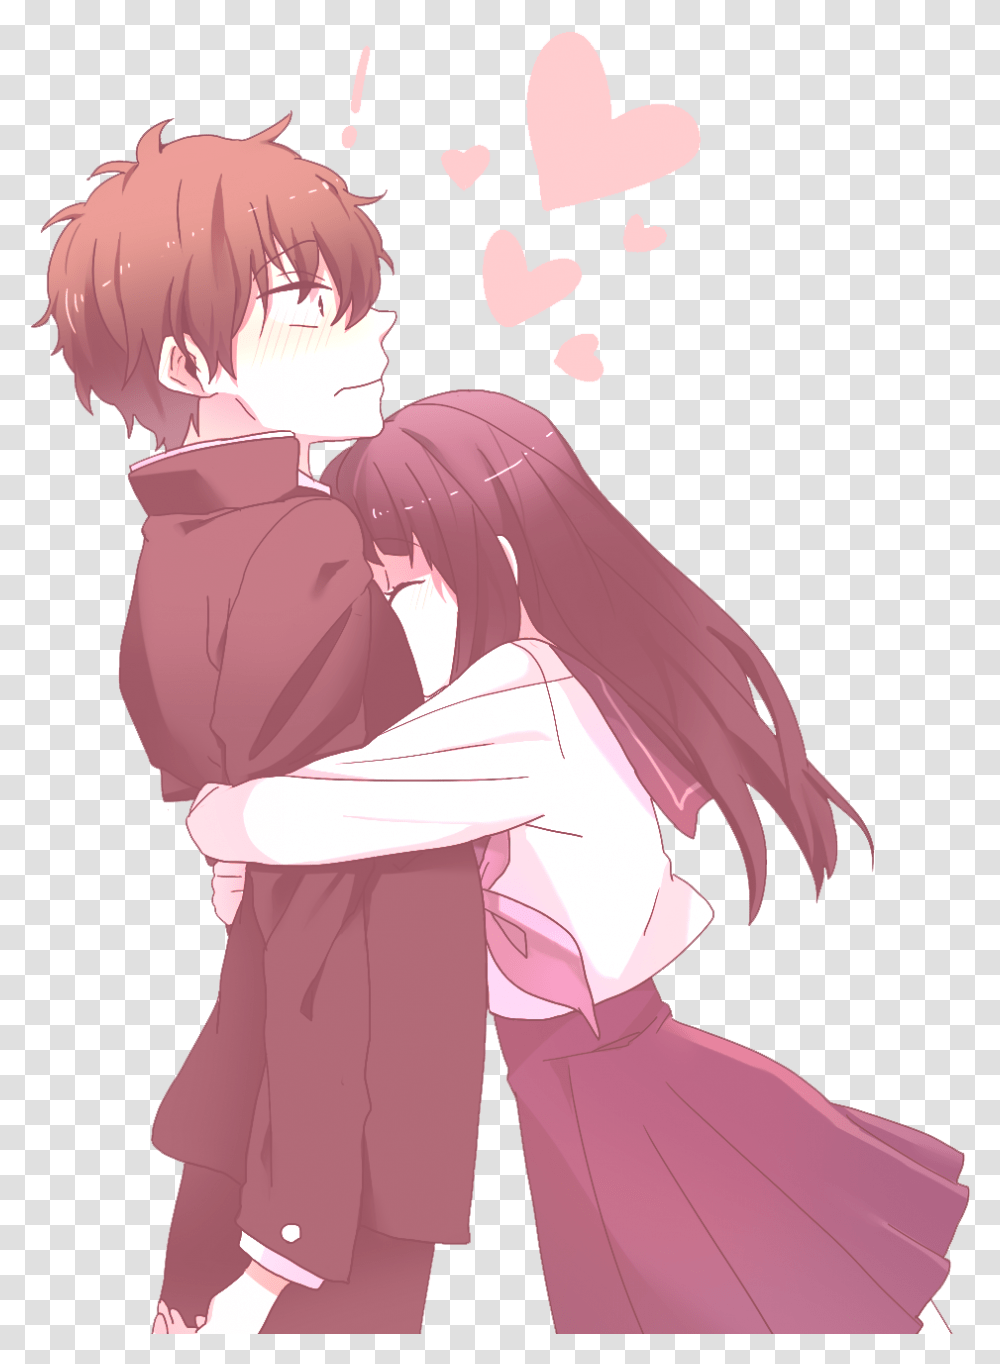 Anime Love Couple Hugging Cute Anime Couples, Manga, Comics, Book, Person Transparent Png